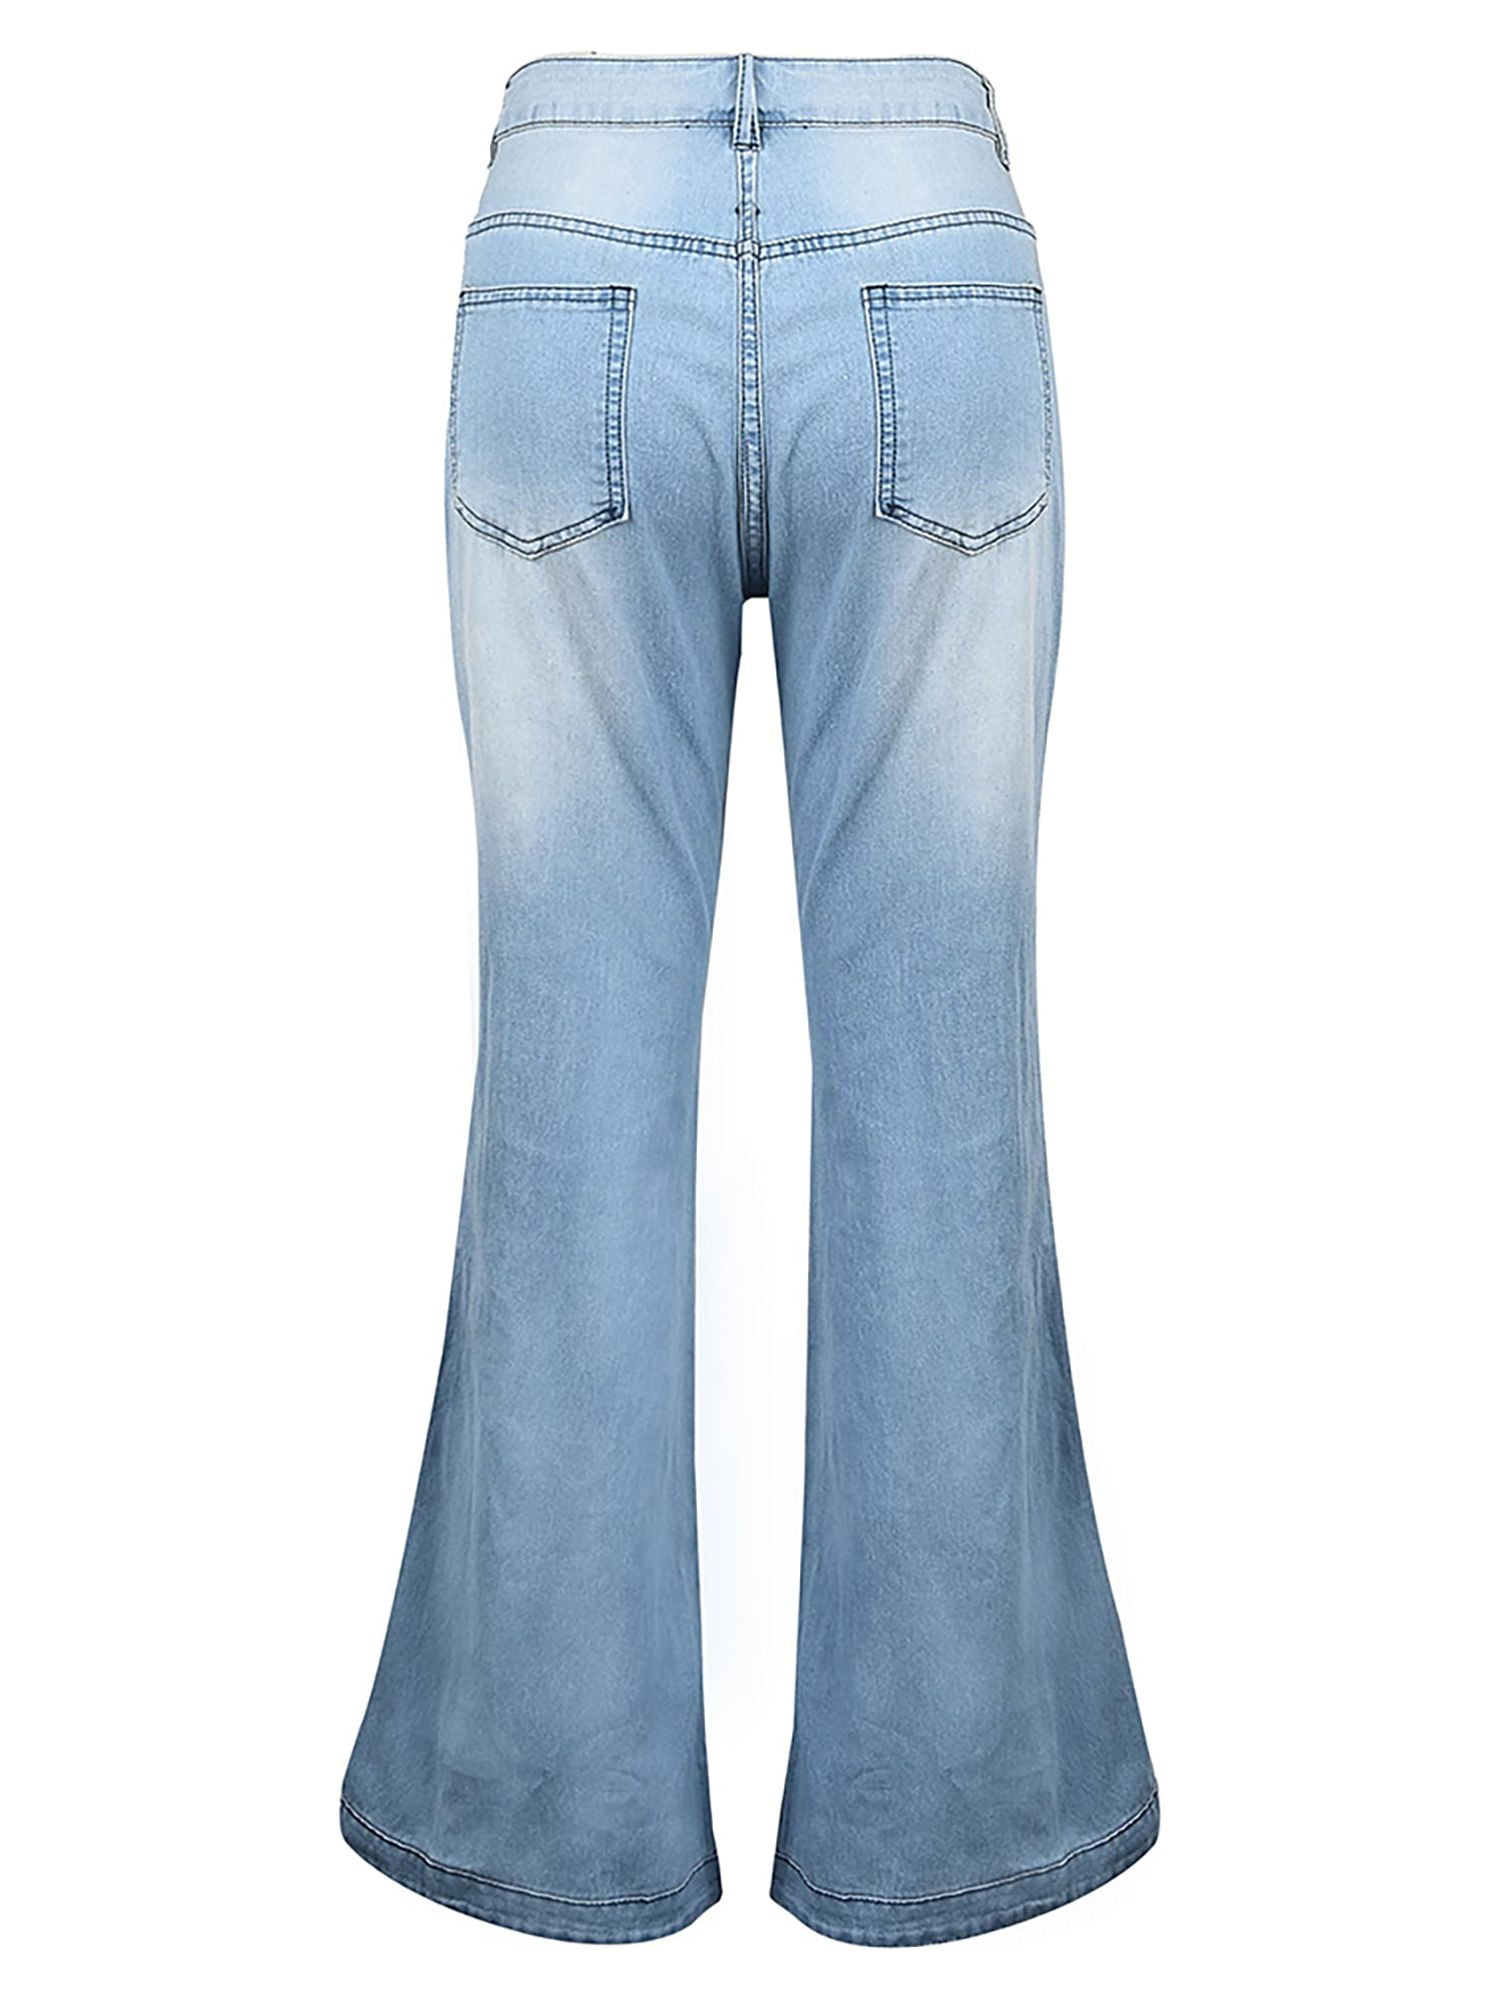 JDinms Women's Bell Bottom High Waist Fitted Denim Flare Jeans 